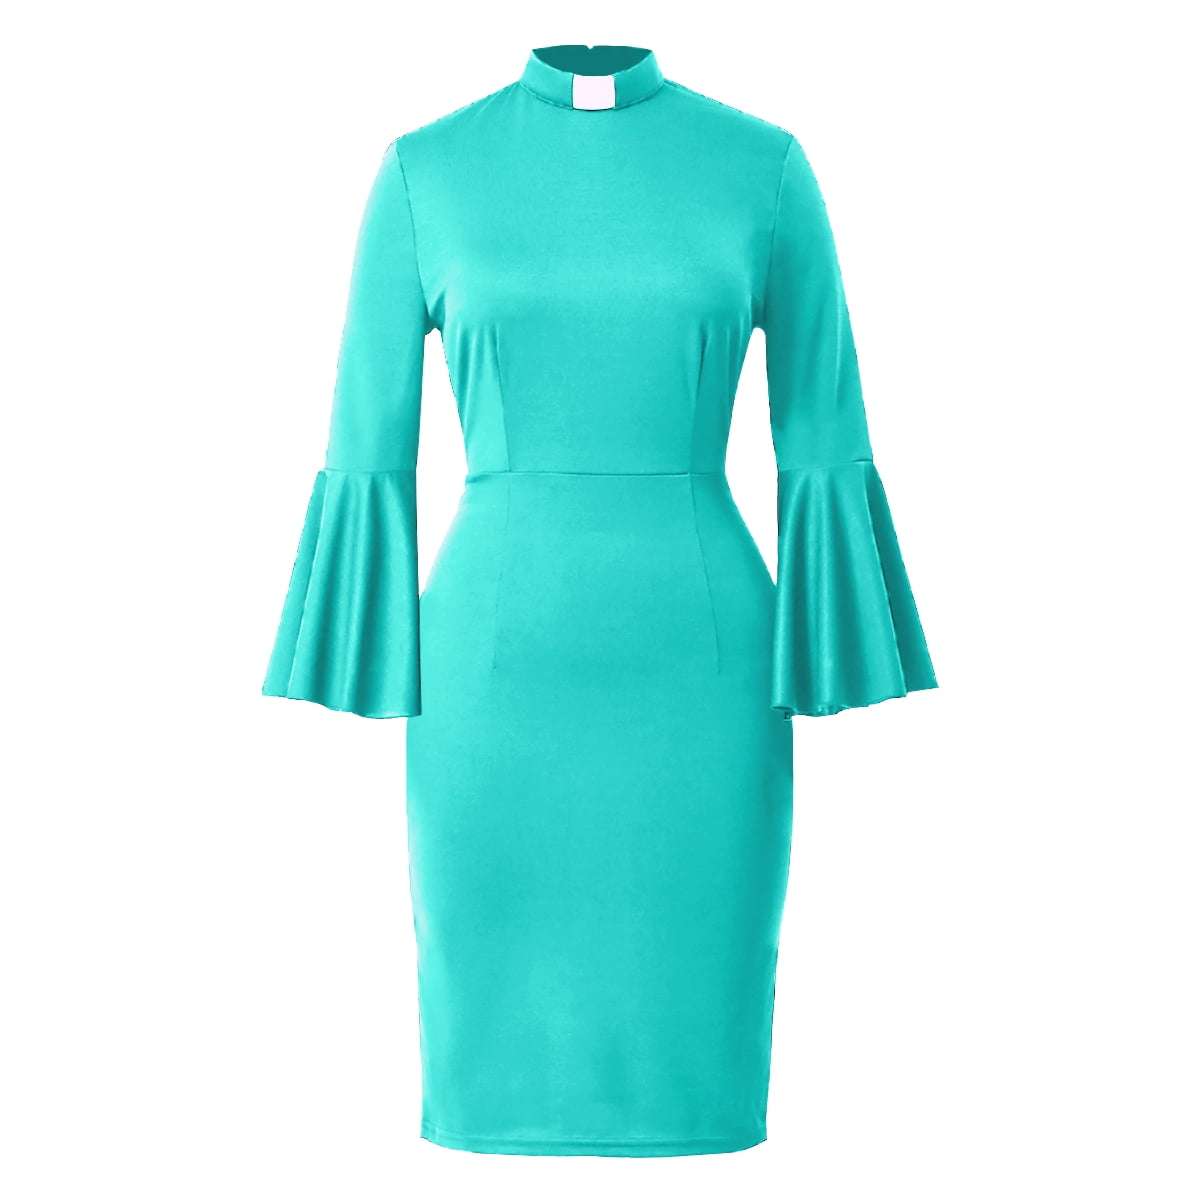 GRACEART Church Dress for Women Plus Size Ruffle Bell Sleeve Flounce ...